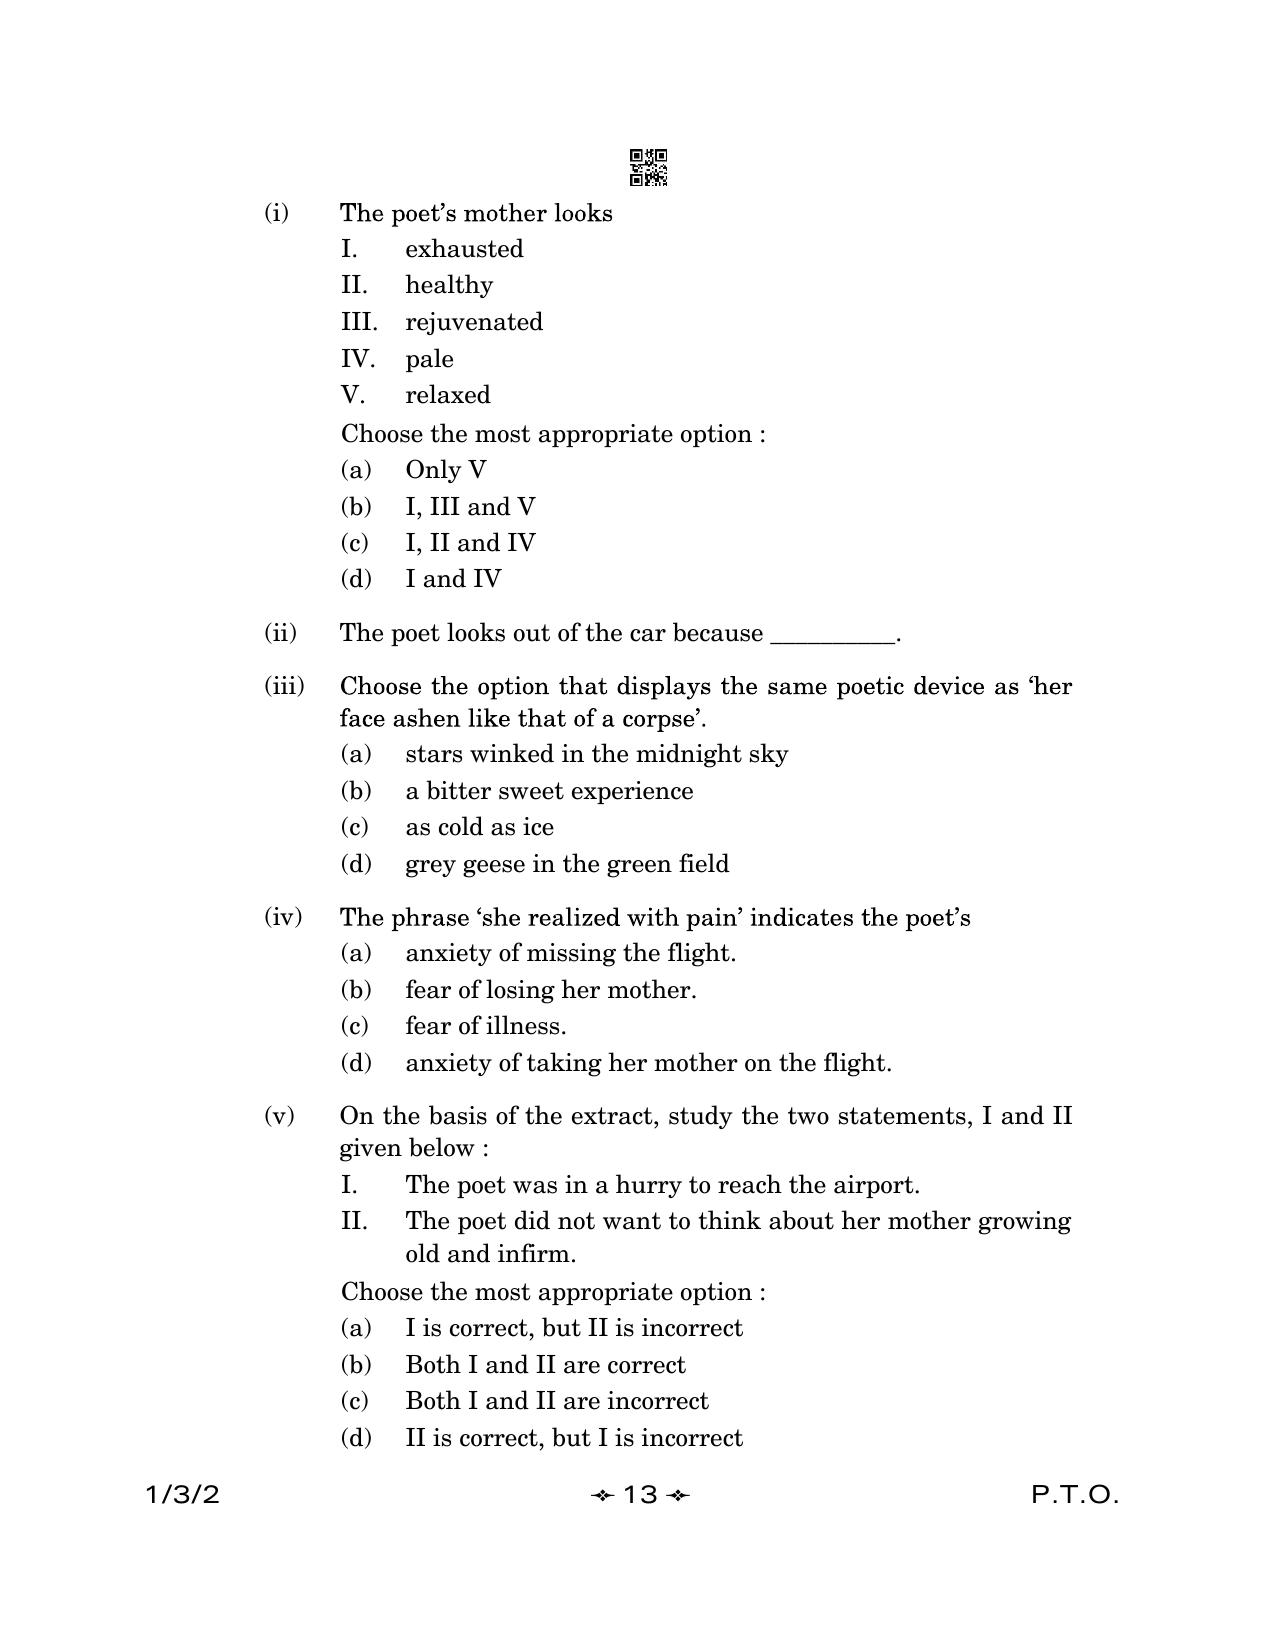 CBSE Class 12 1-3-2 English Core 2023 Question Paper - Page 13